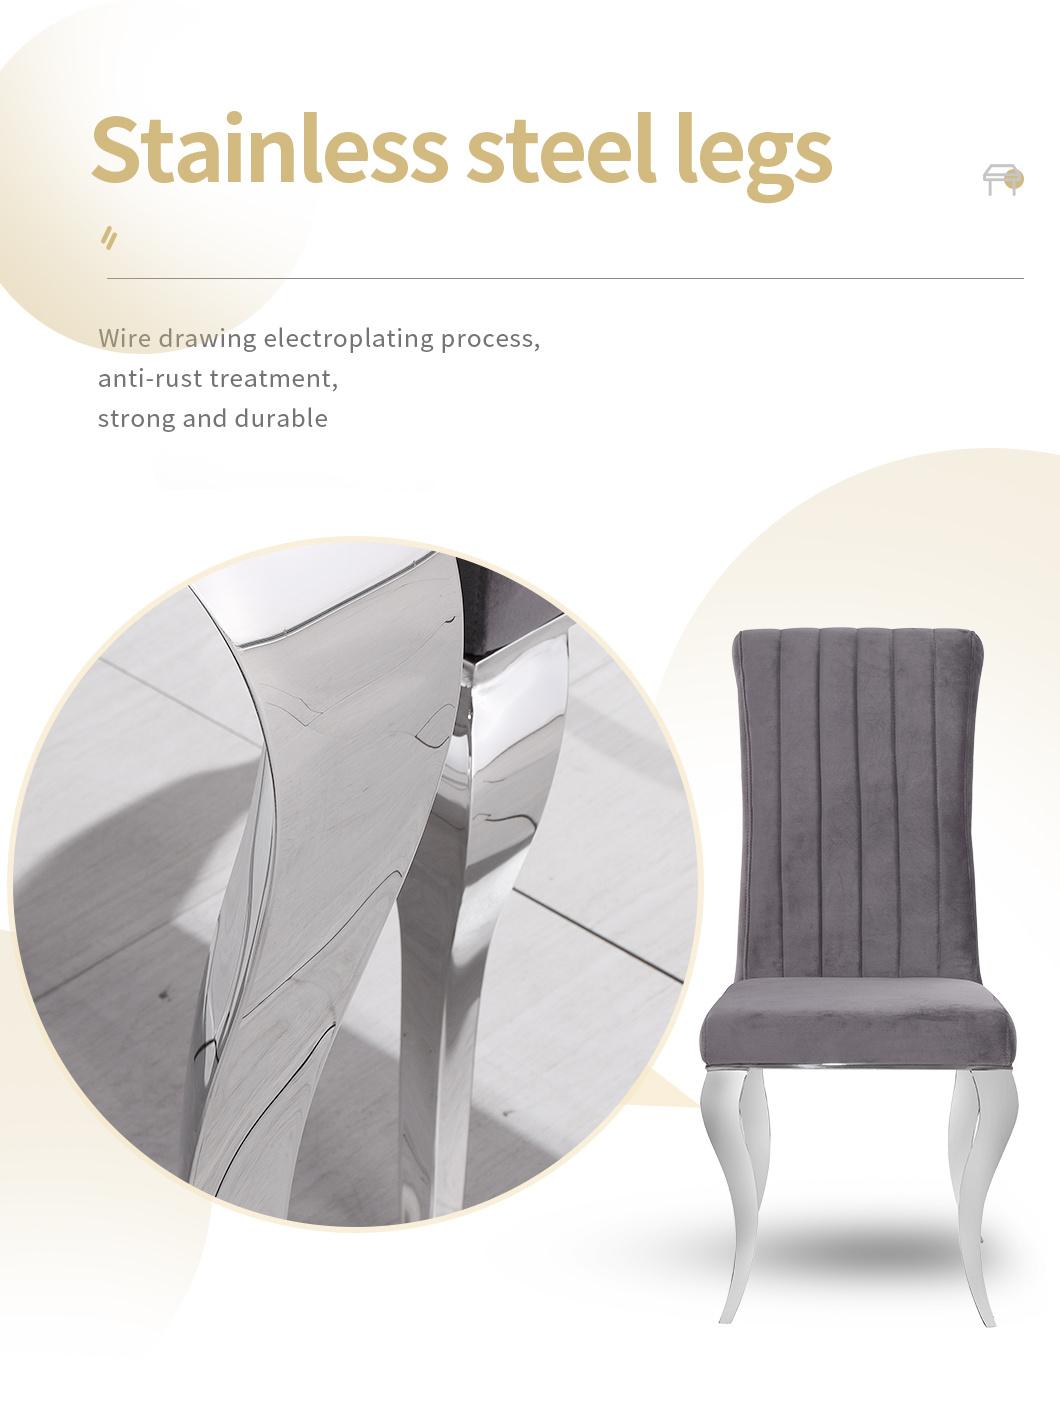 High Quality Customized Rectangle Diron Carton Box China Dining Furniture Chair